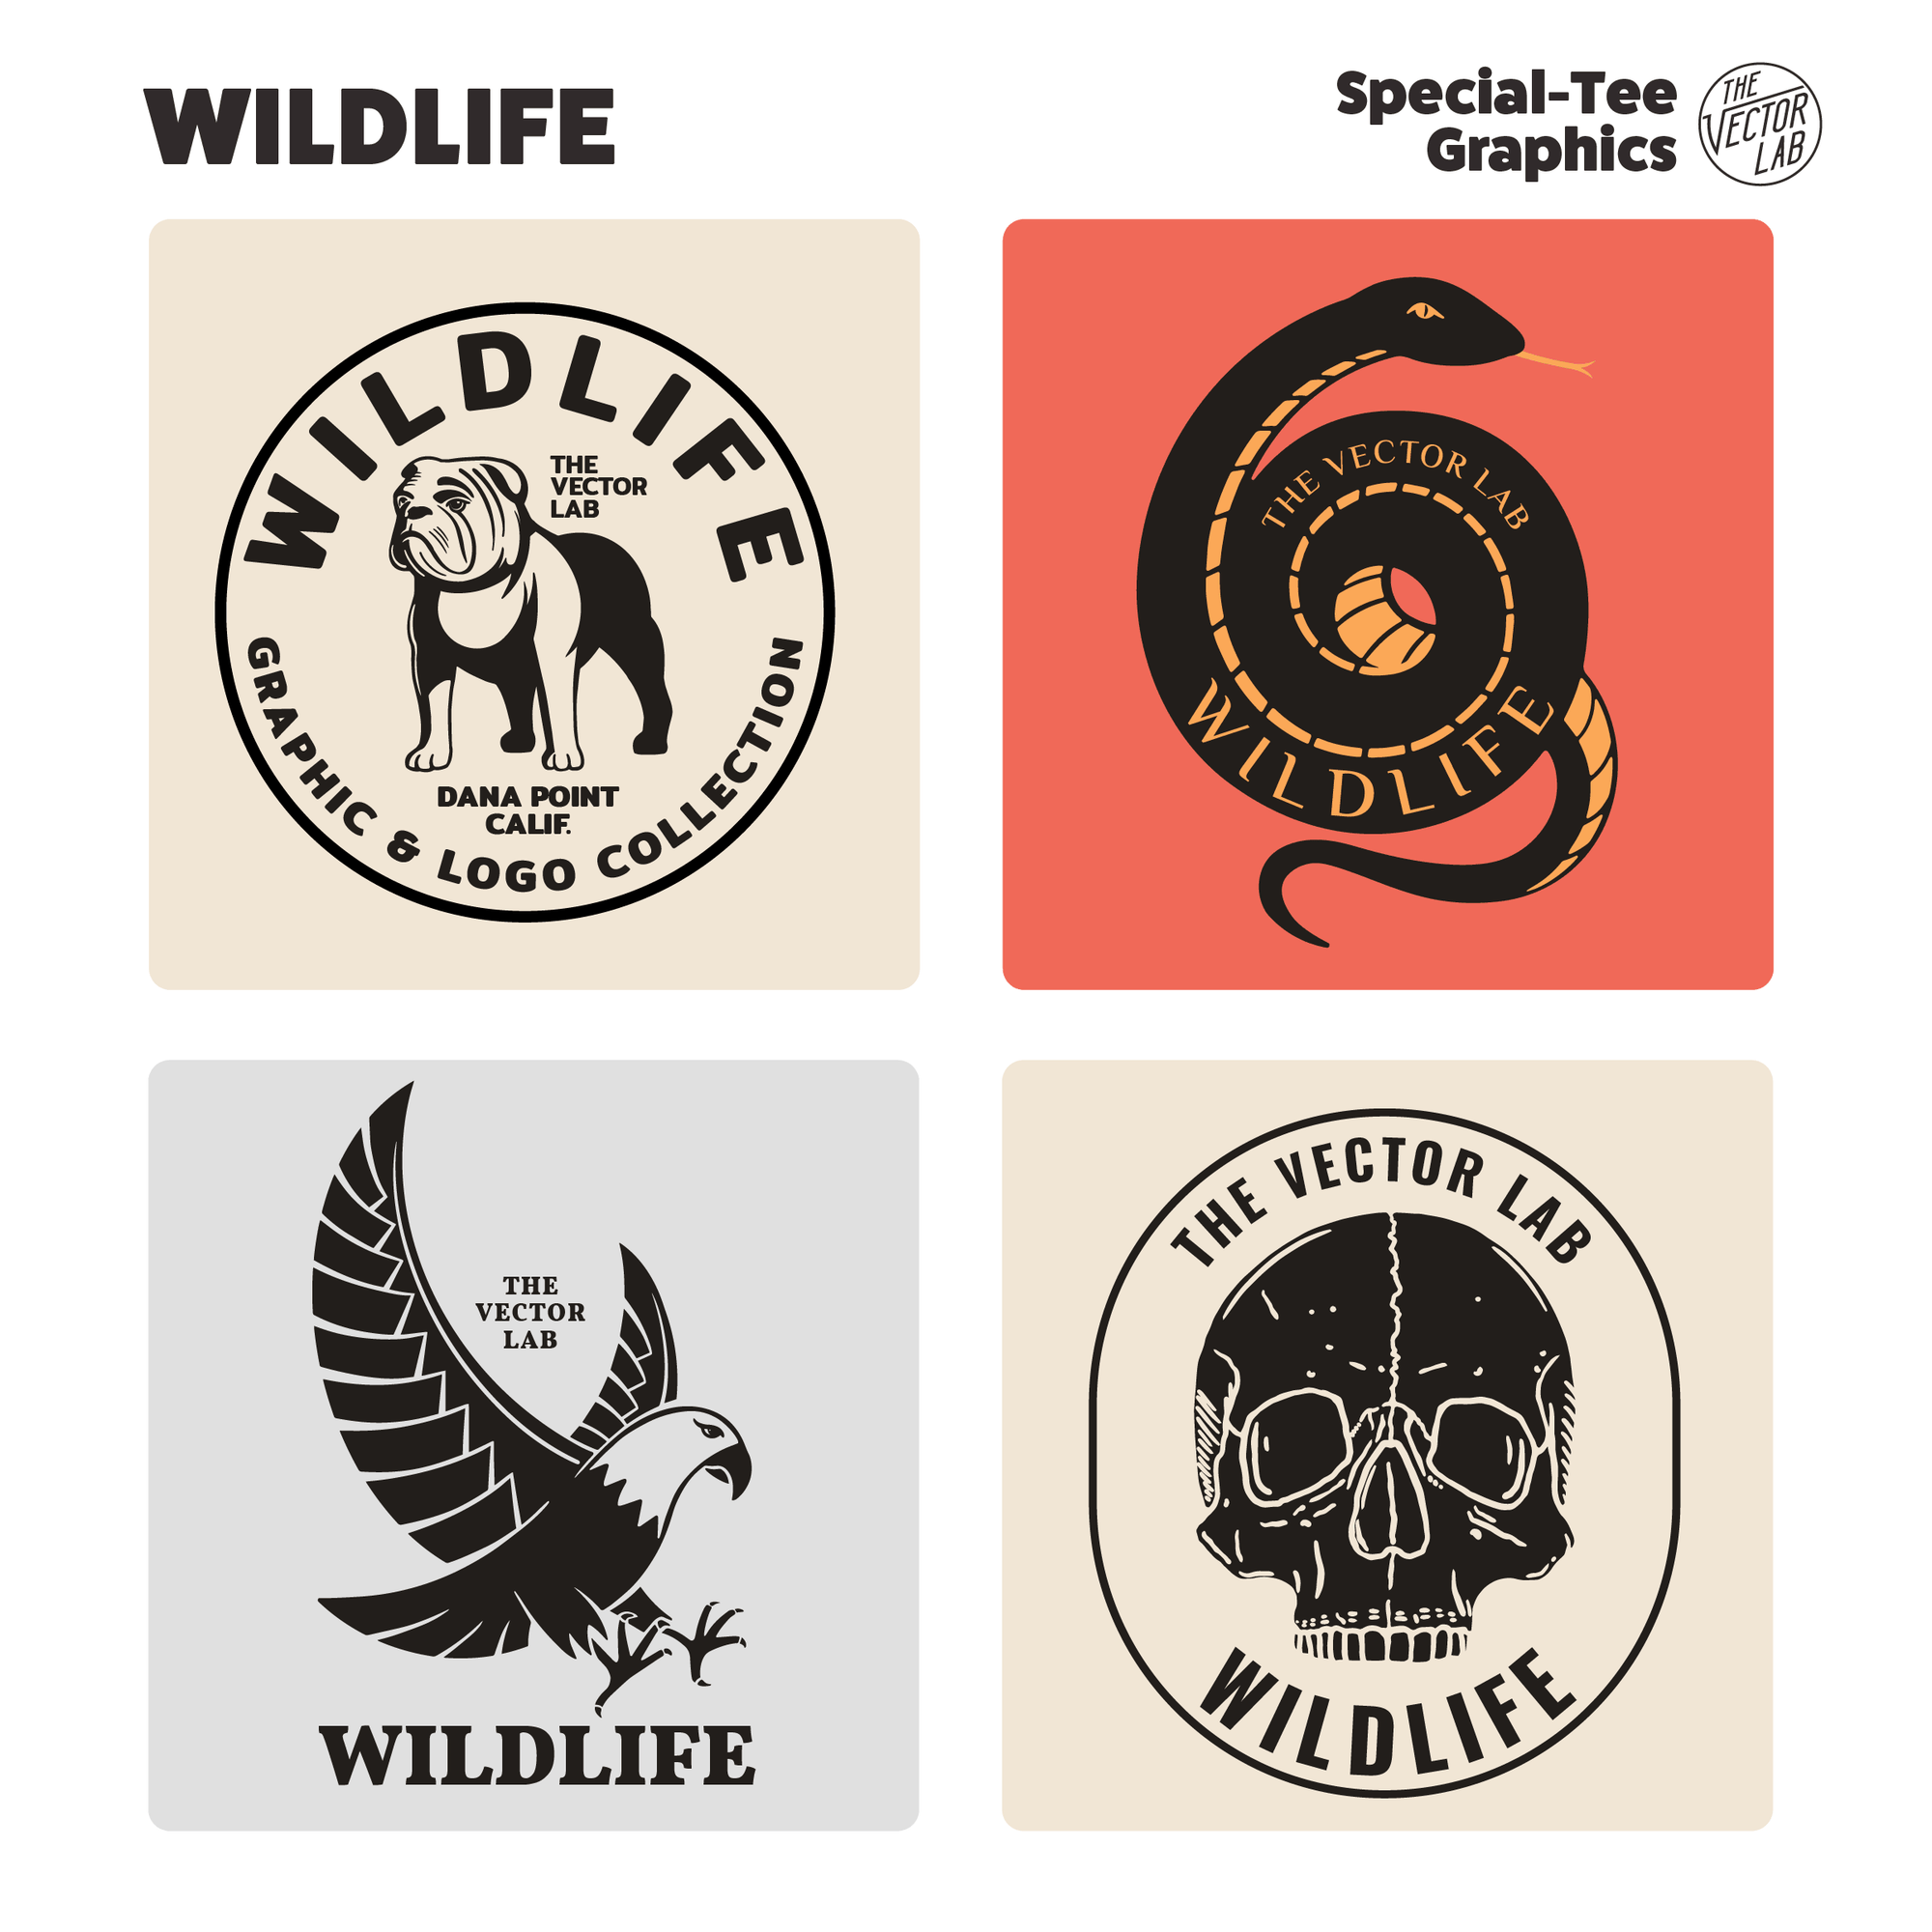 Wildlife graphic logo templates for Adobe Affinity CorelDraw